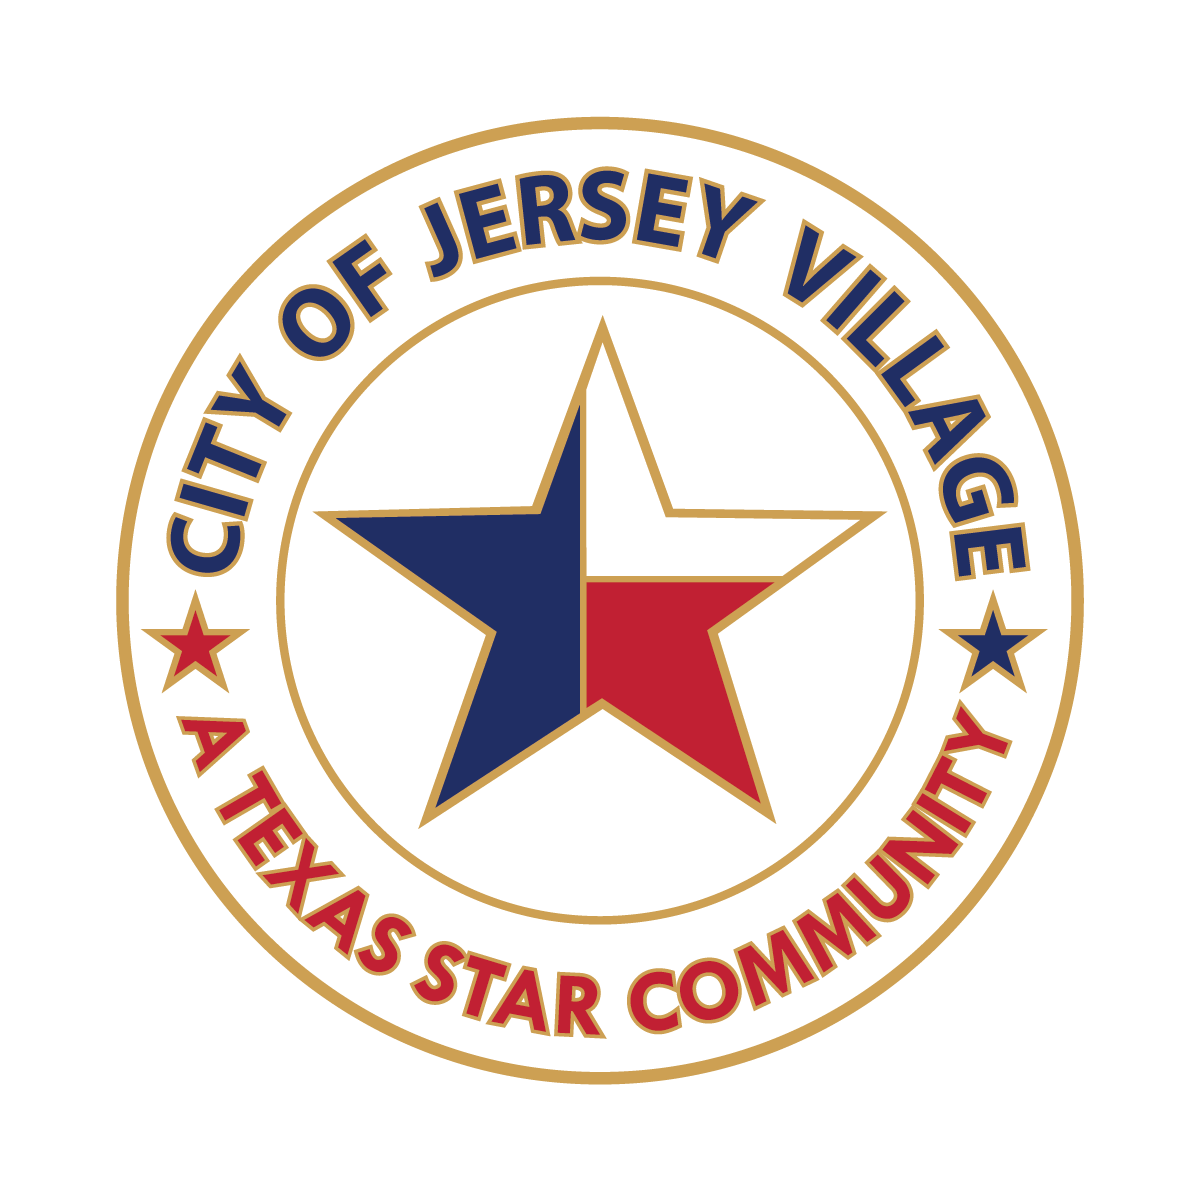 Organization logo of City of Jersey Village